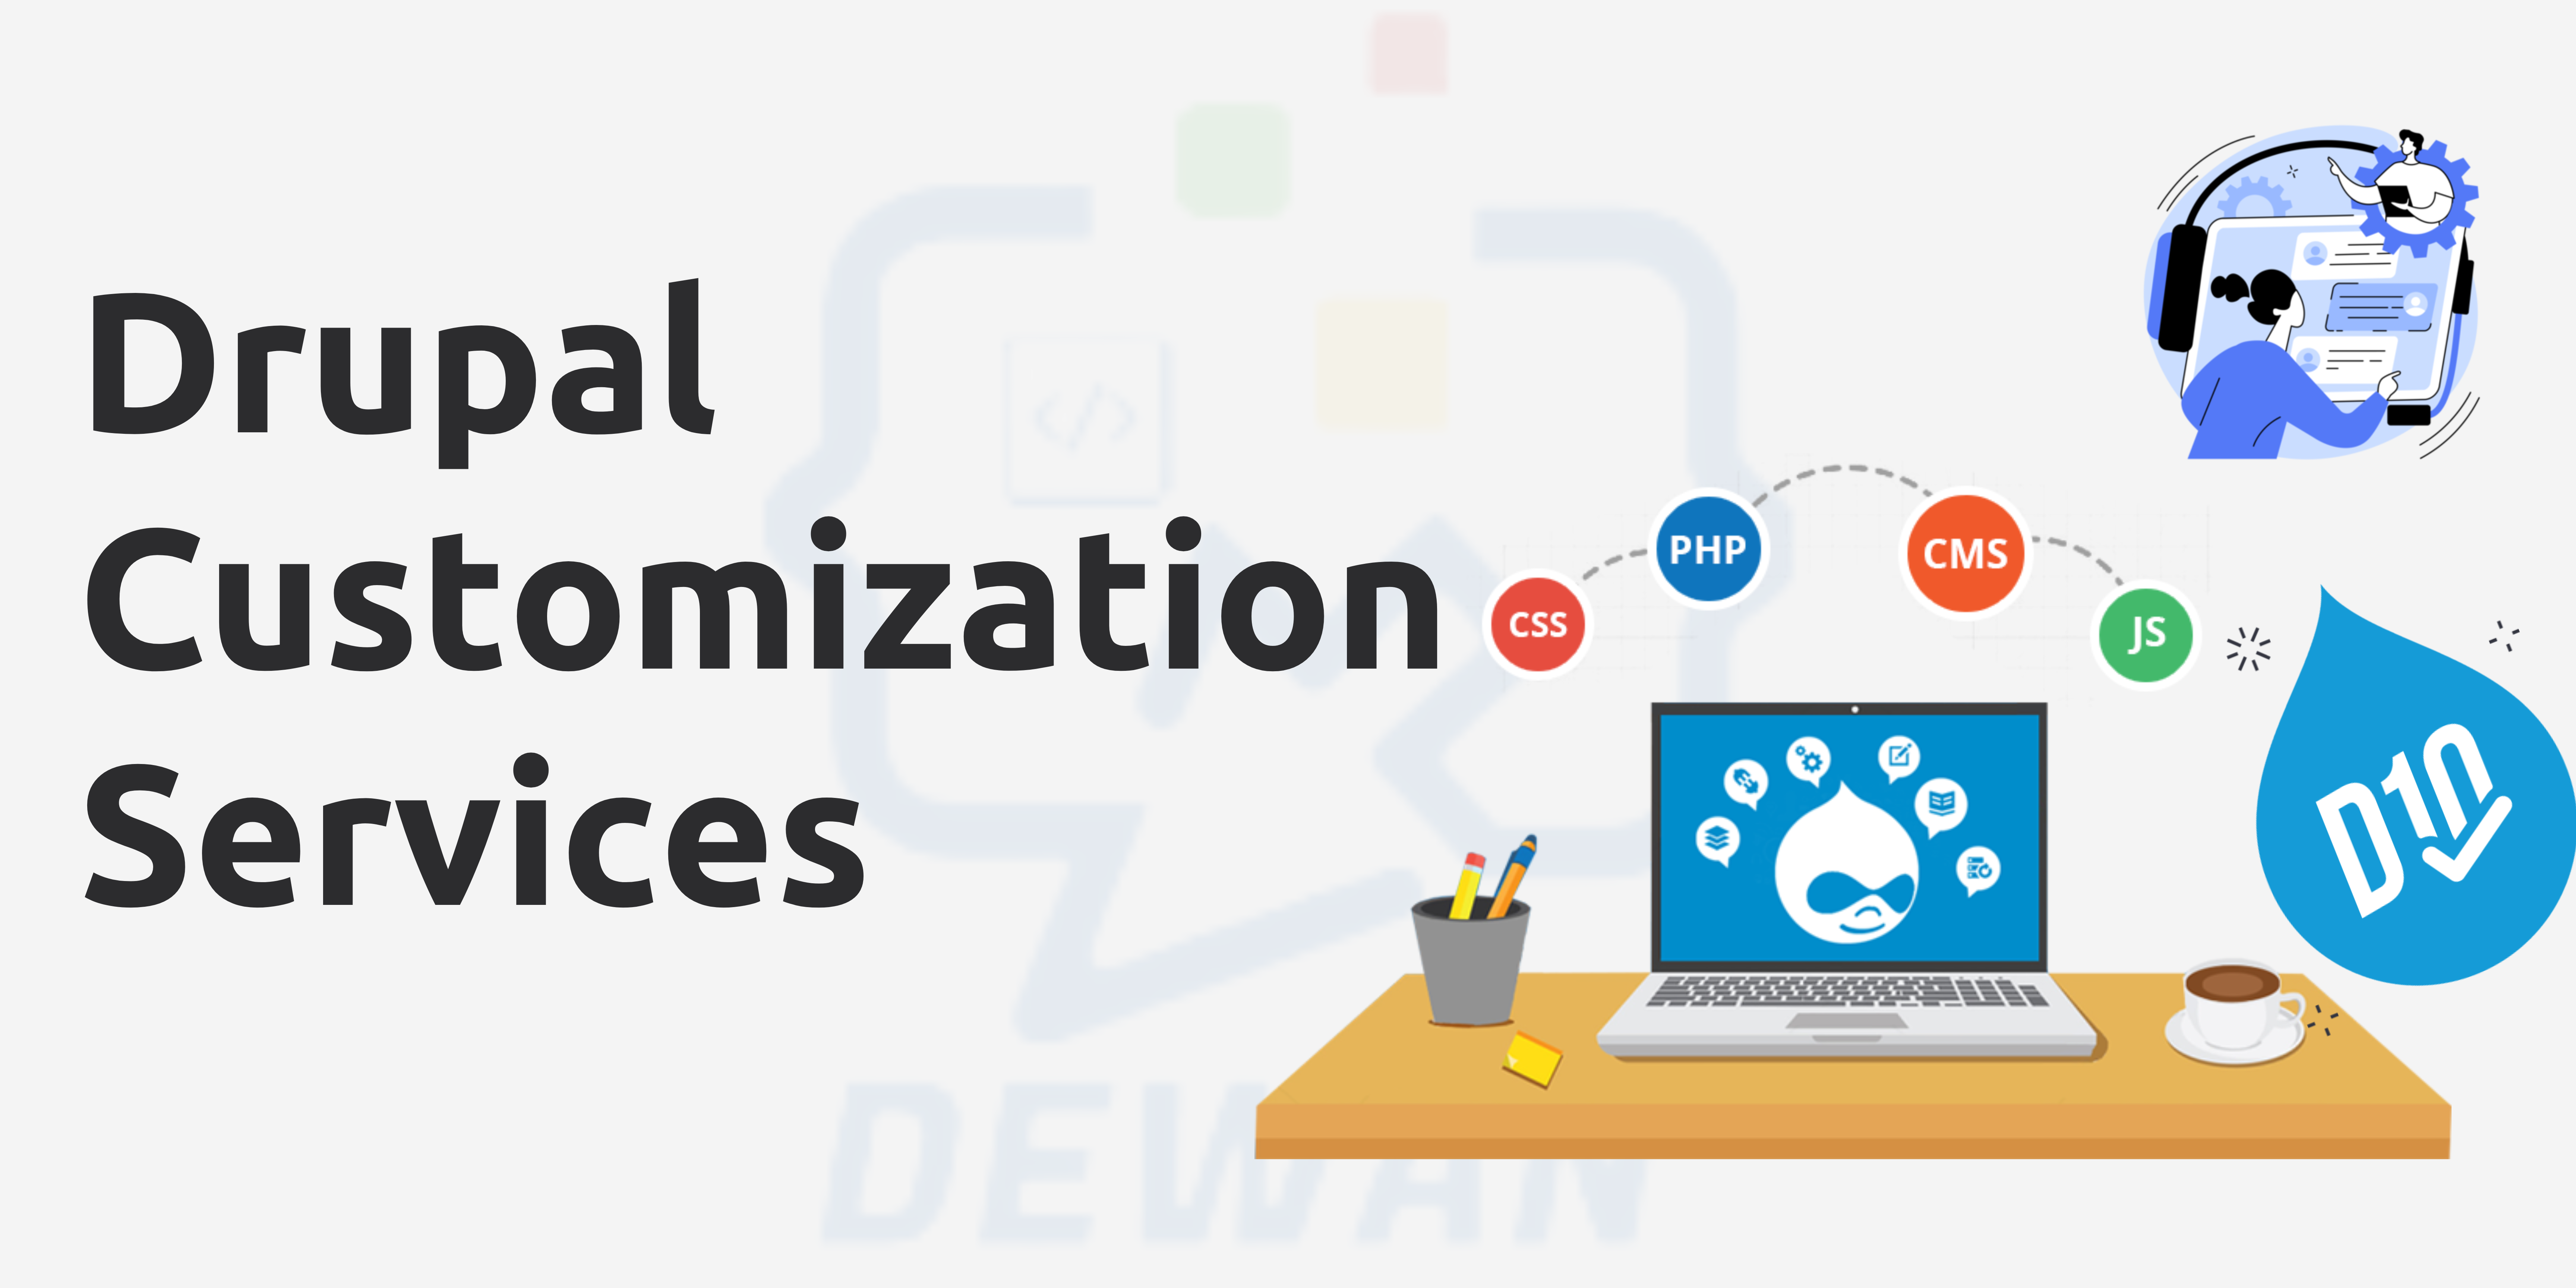 Drupal customization services